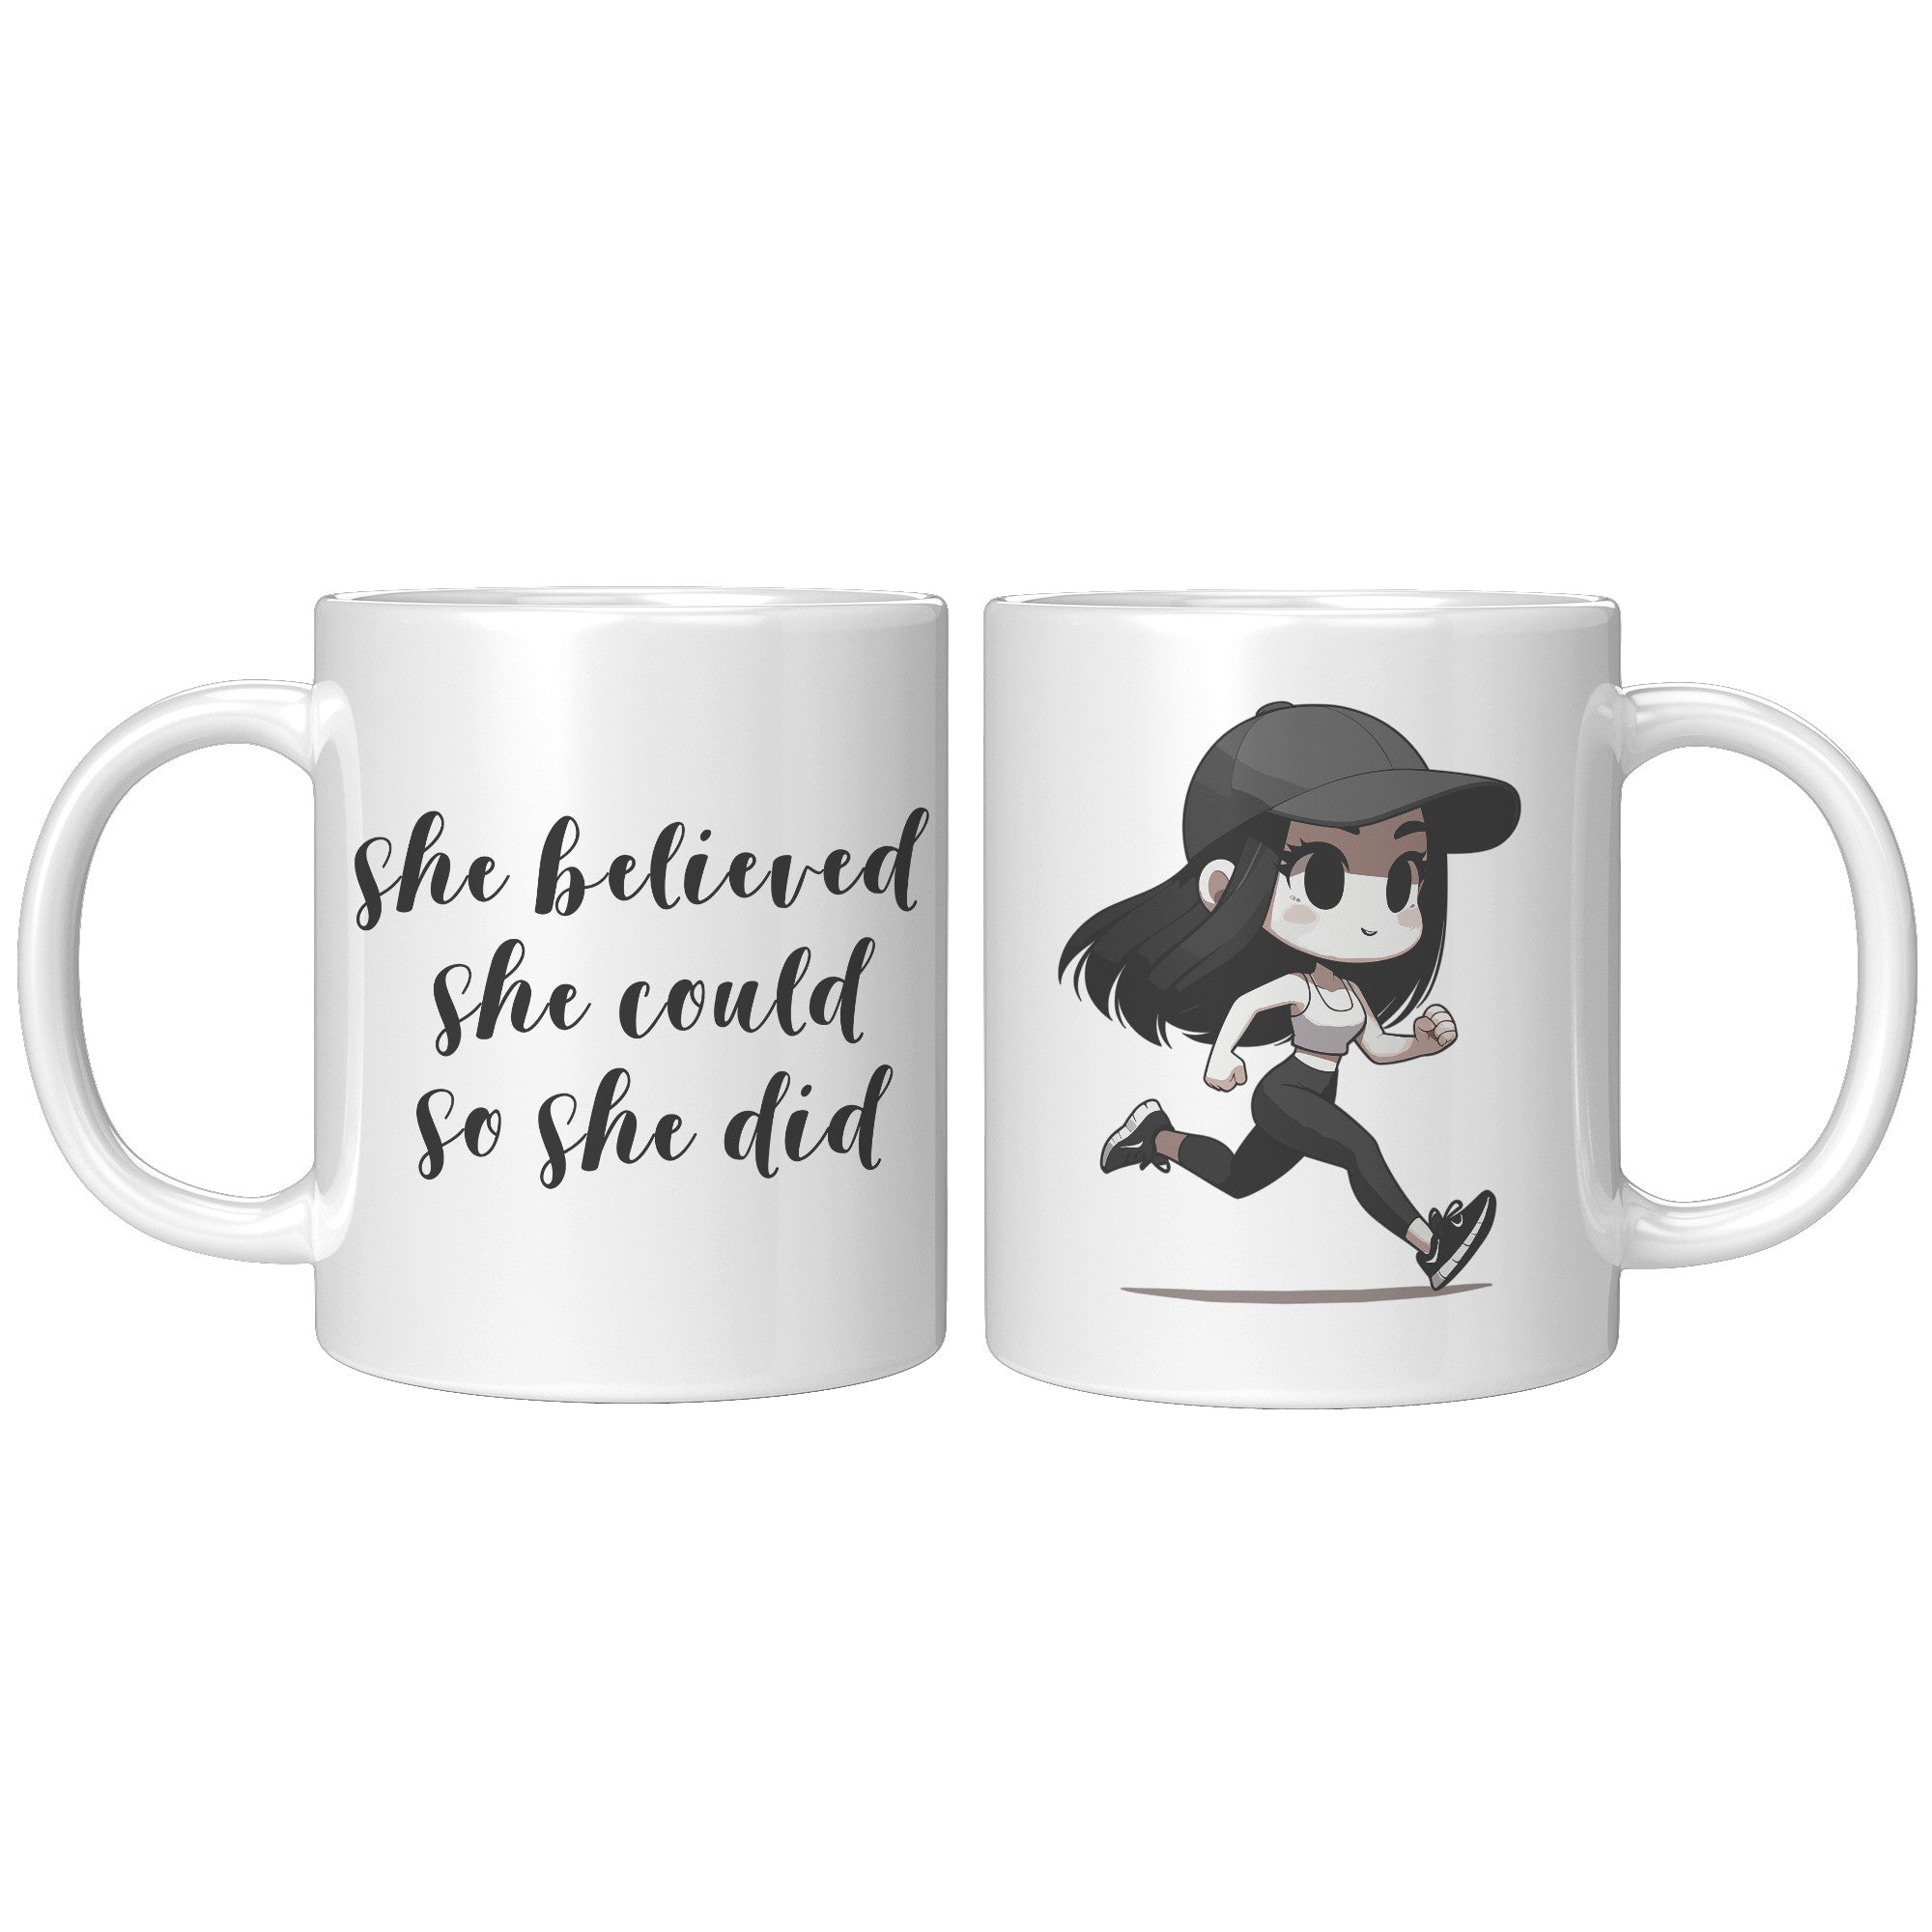 Female Runner Coffee Mug - Inspirational Running Quotes Cup - Perfect Gift for Women Runners - Motivational Marathoner's Morning Brew" - C